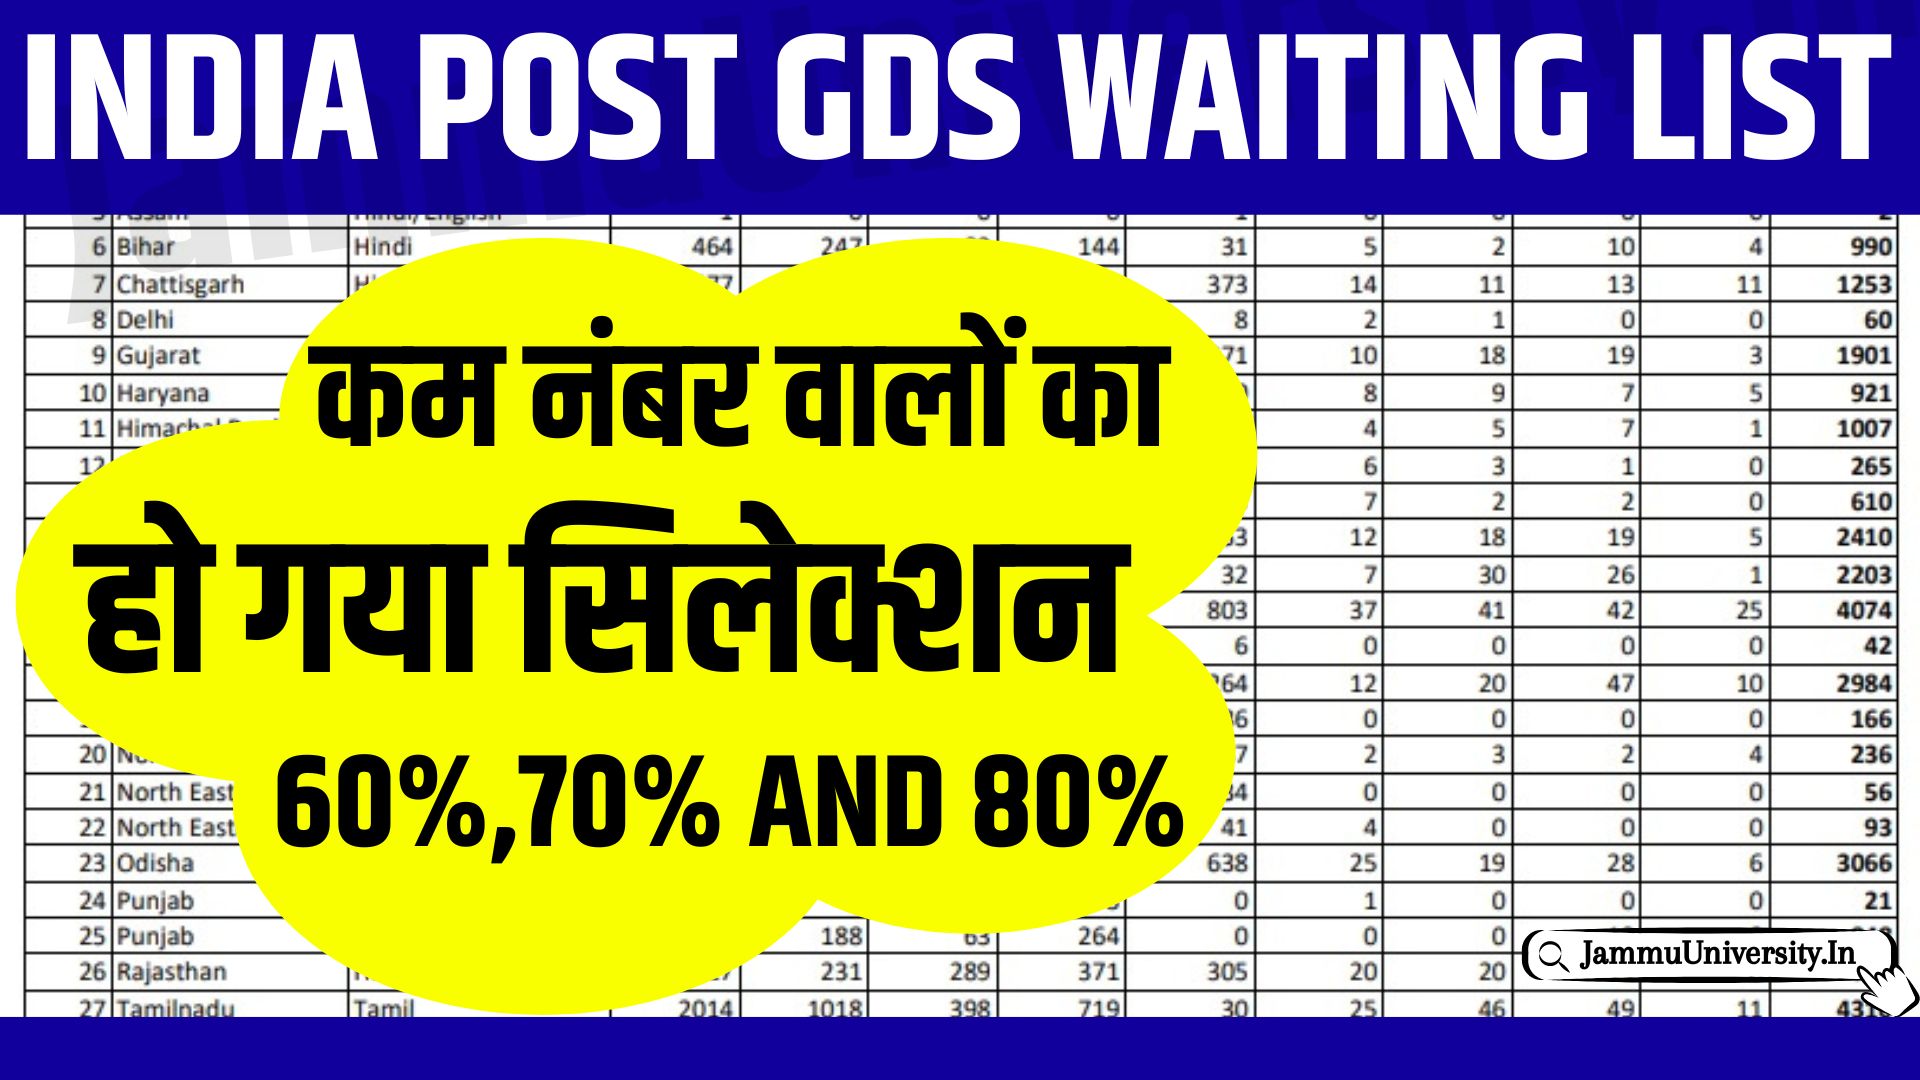 India Post GDS Waiting List